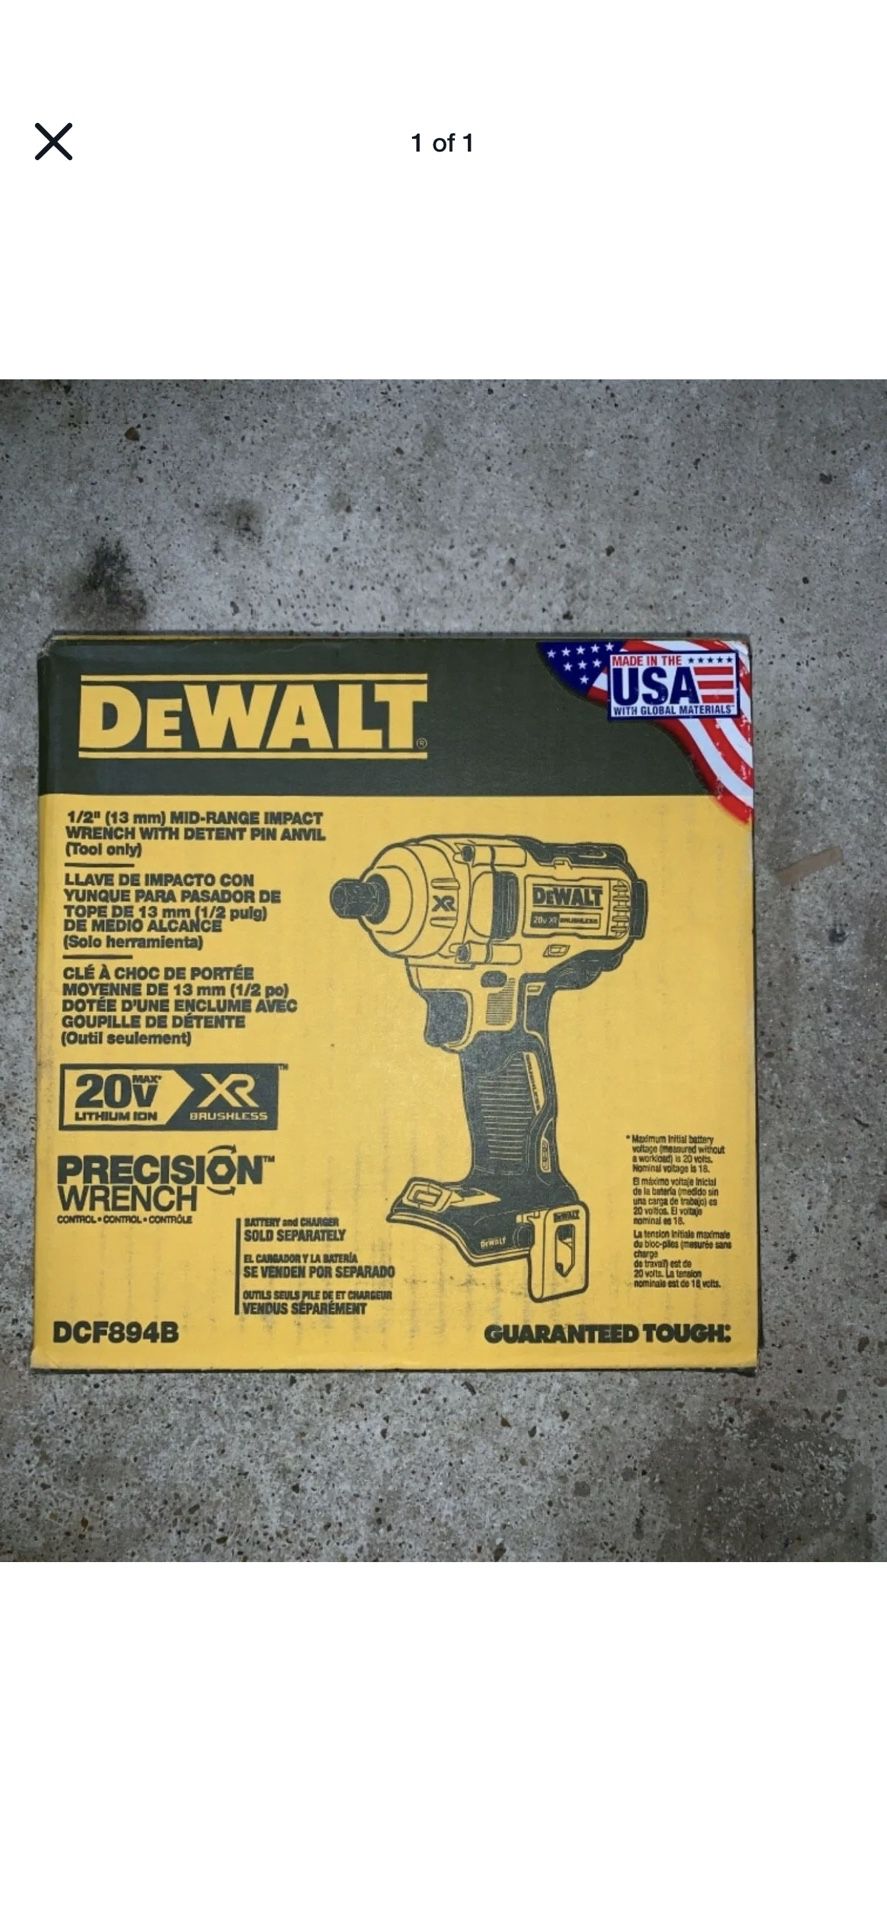 DEWALT DCF894B 1/2" M Cordless Impact Wrench.